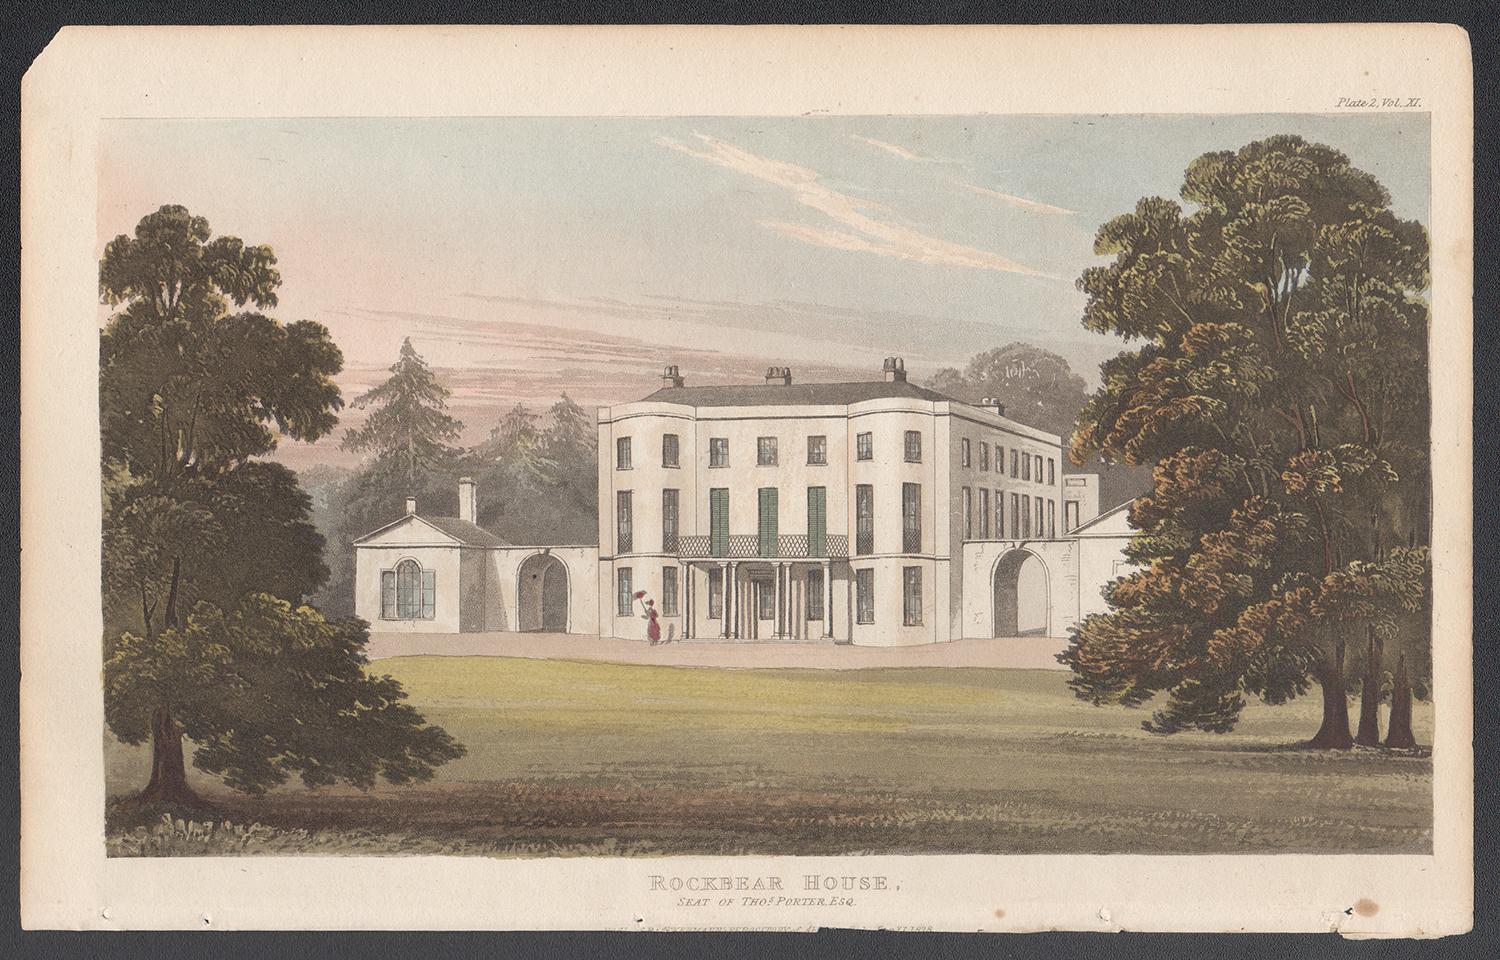 Rockbear House, Devon, English Regency country house colour aquatint, 1818 - Print by Unknown